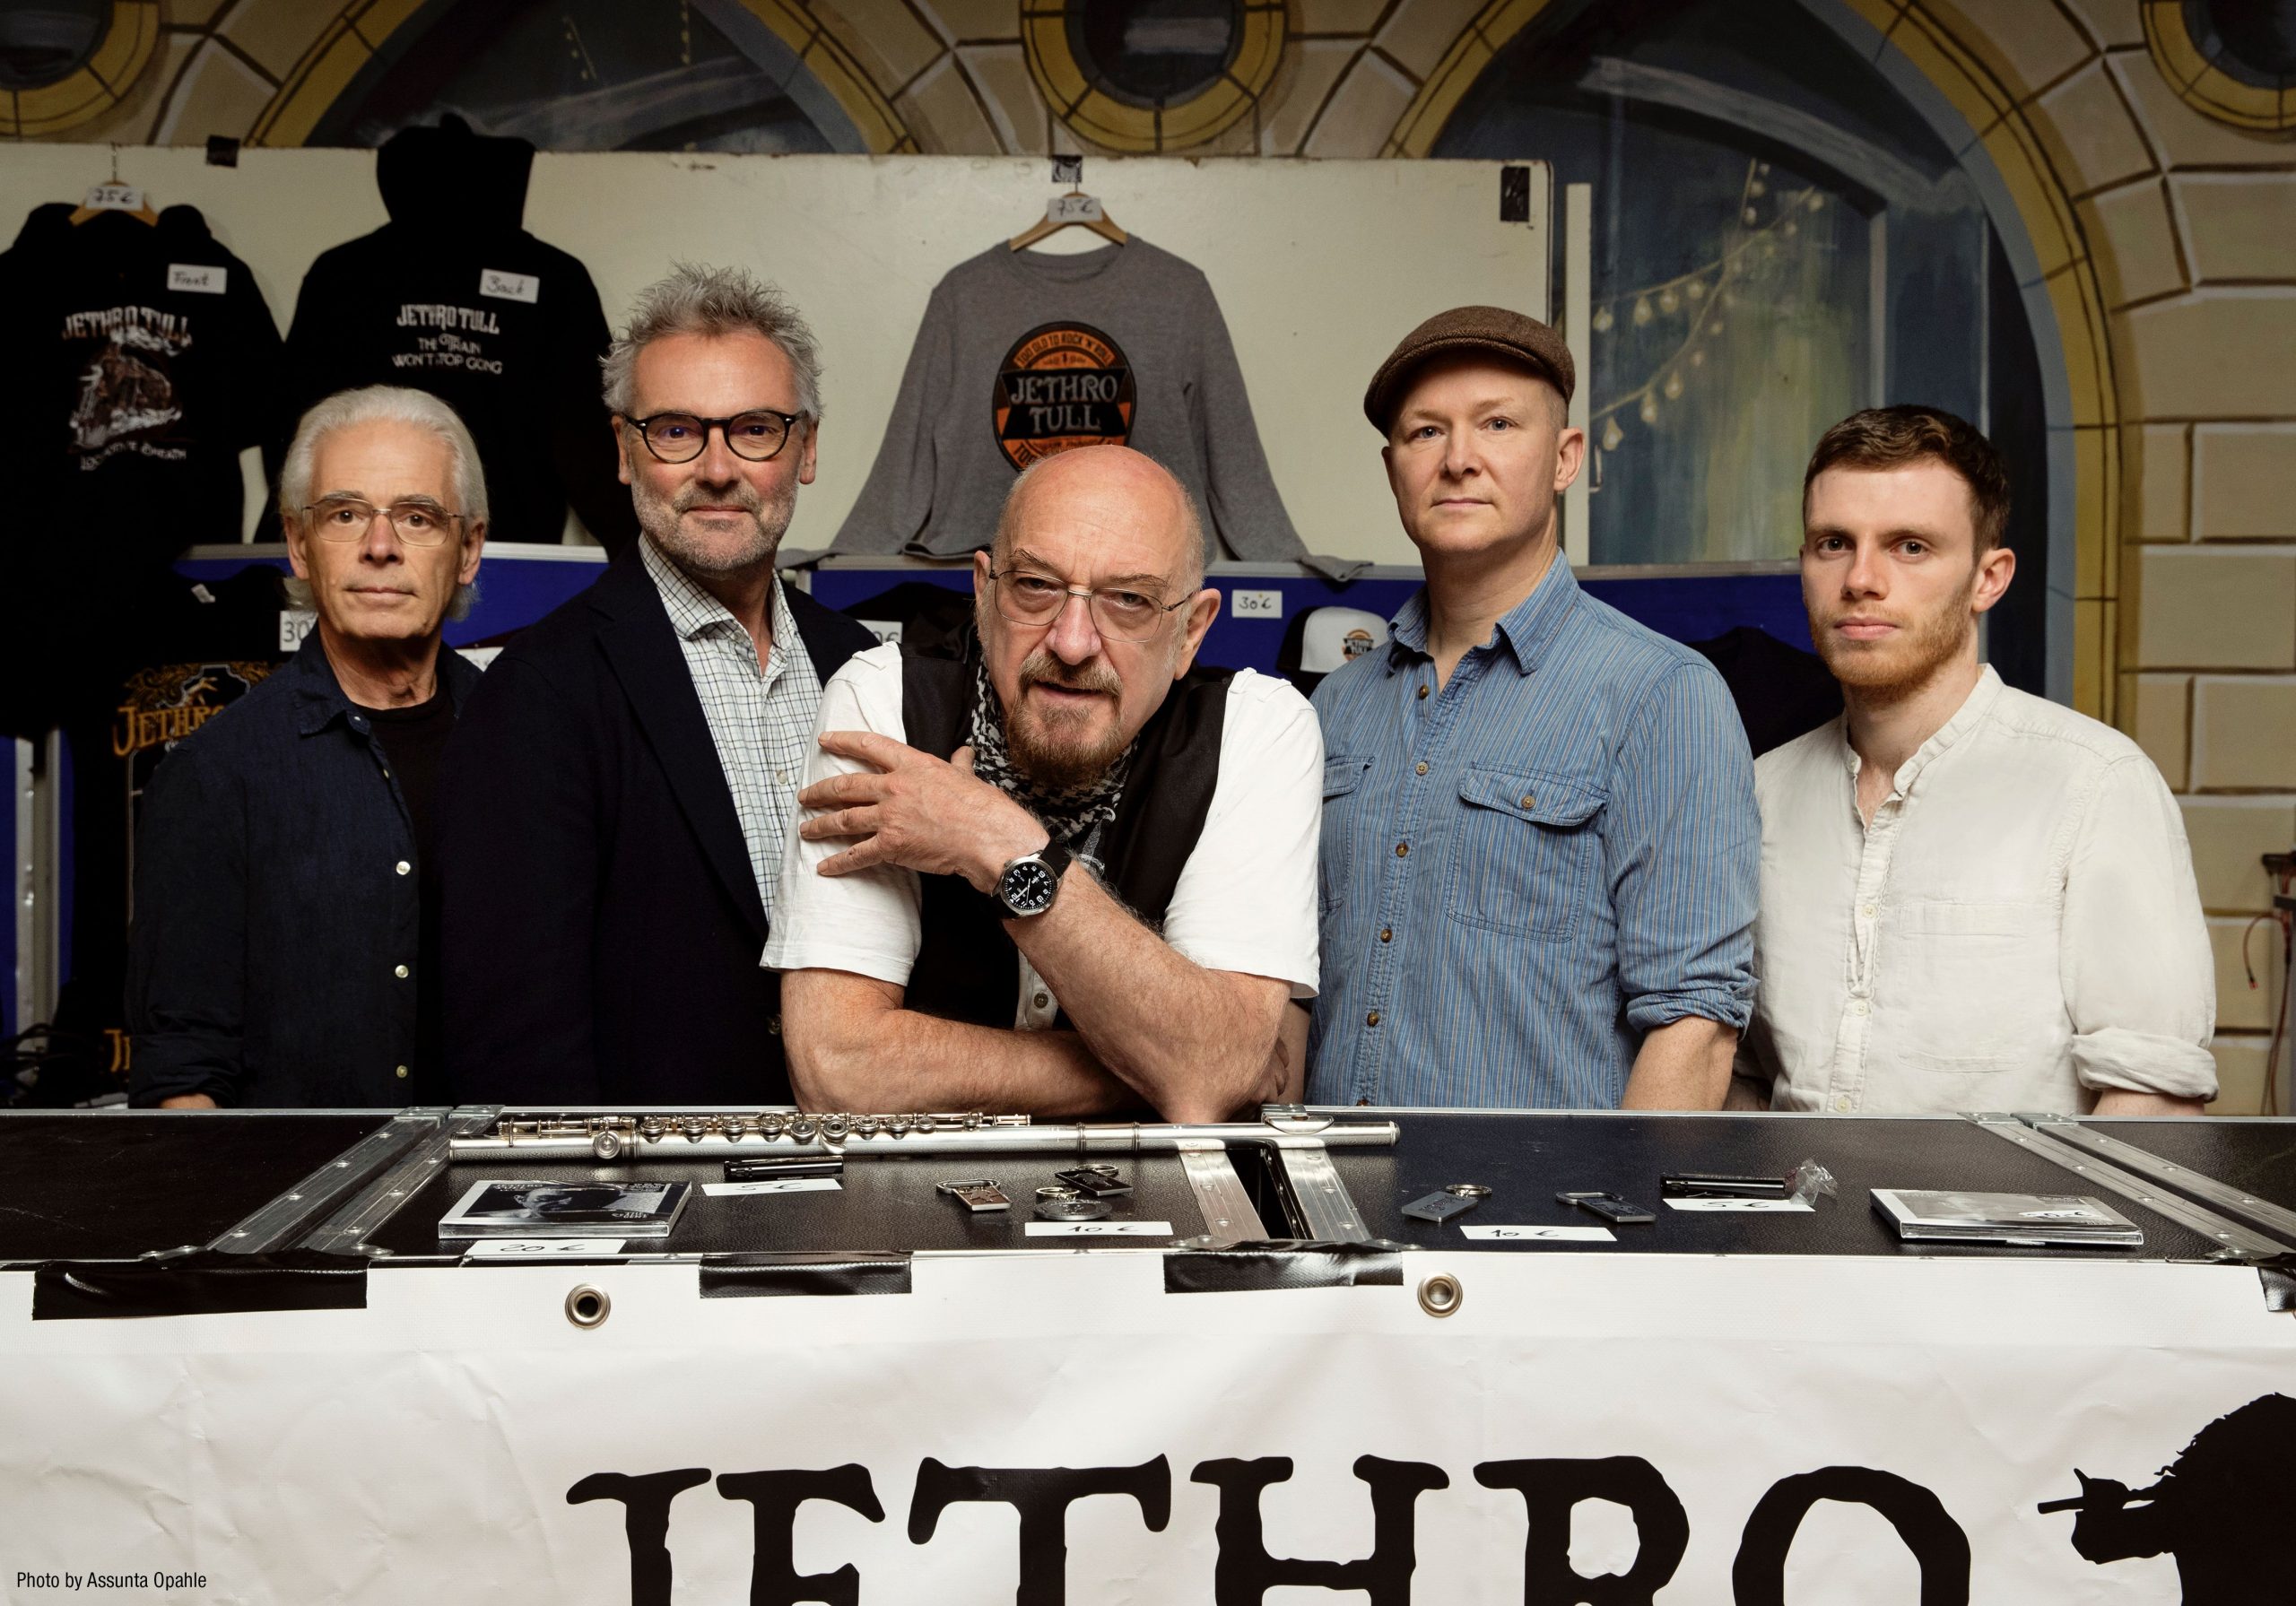 Jethro Tull announce The Seven Decades UK tour